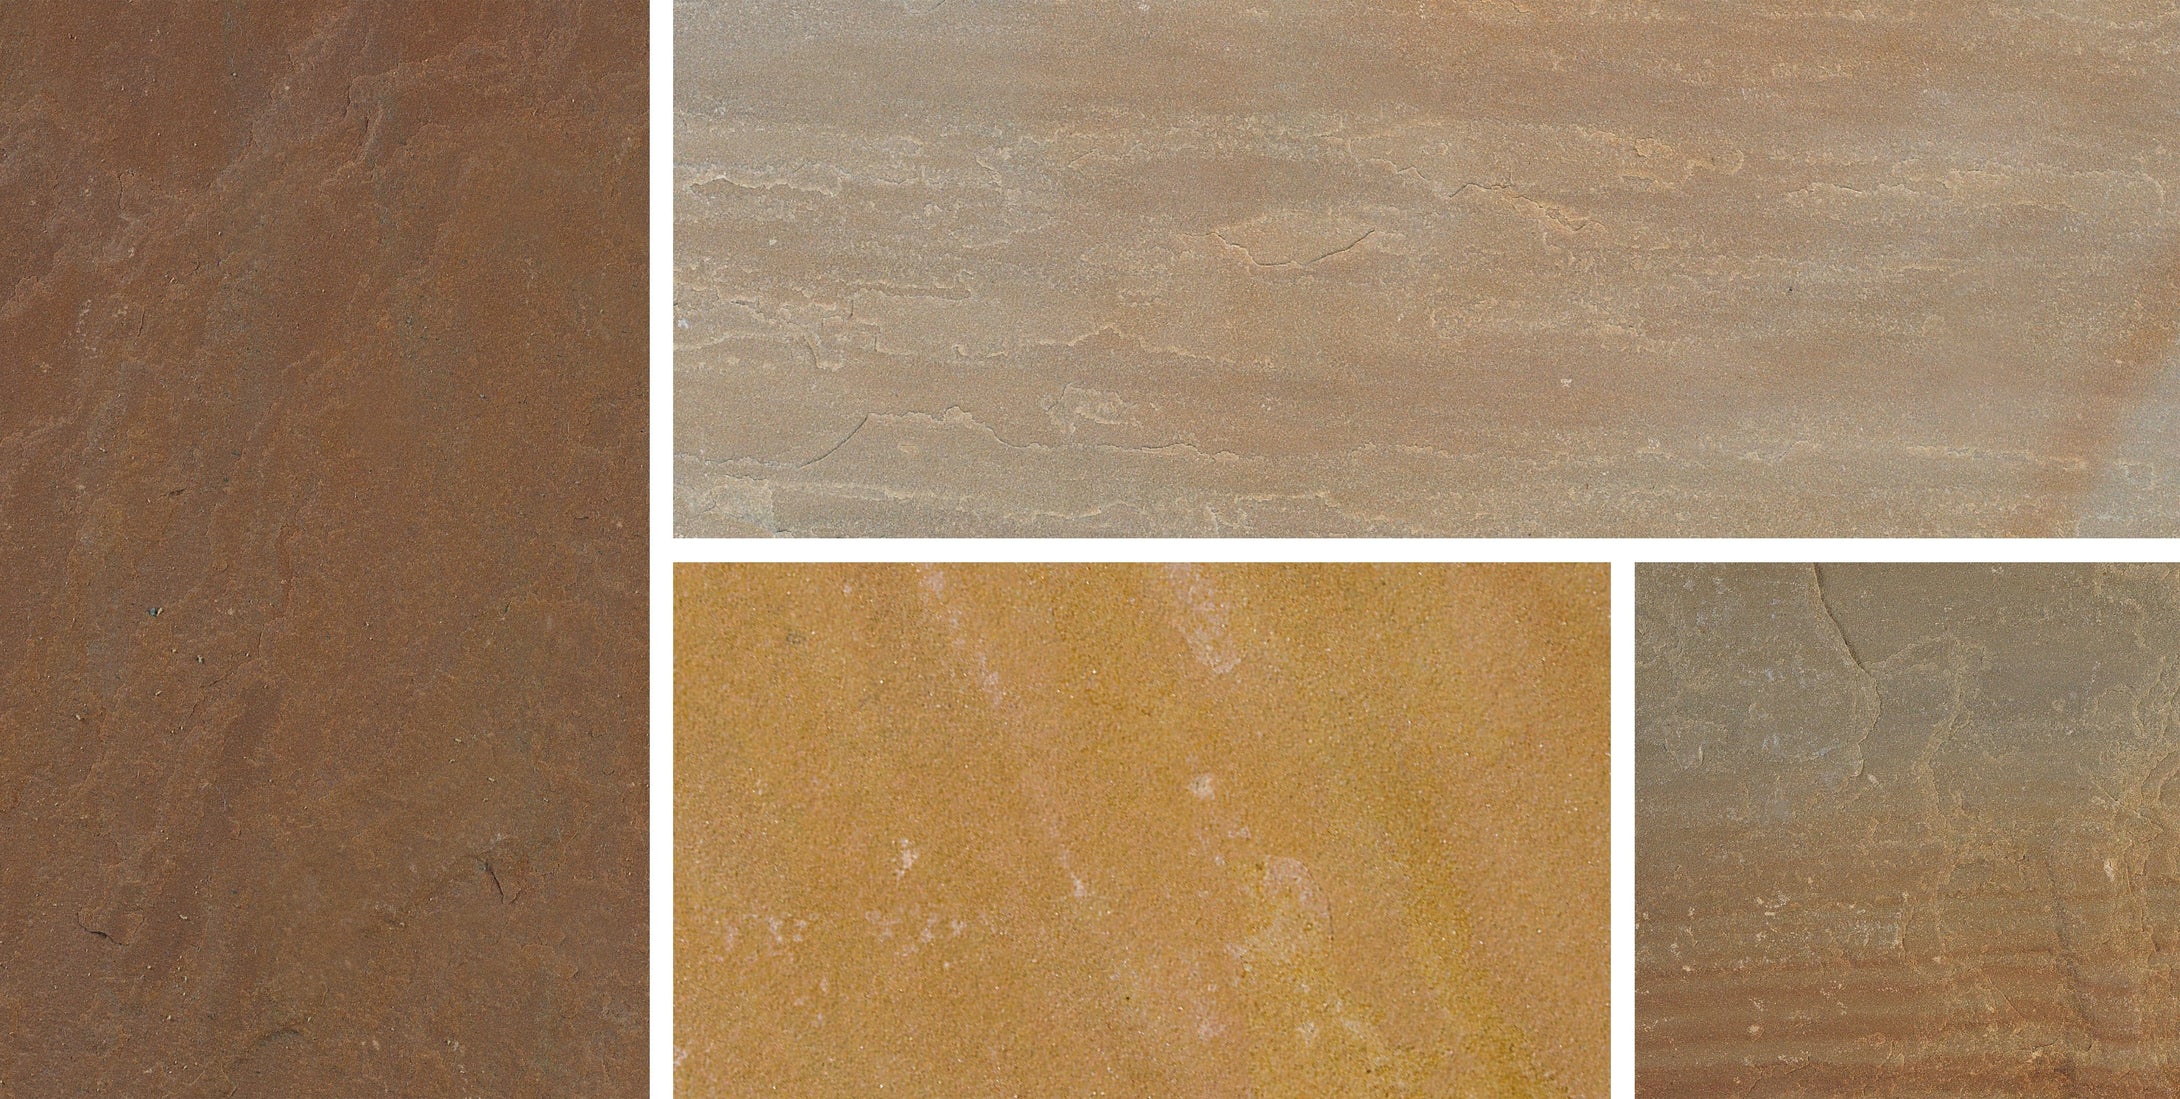 Bradstone  Natural Sandstone Paving  in Sunset Buff / Camel Dust paving slabs